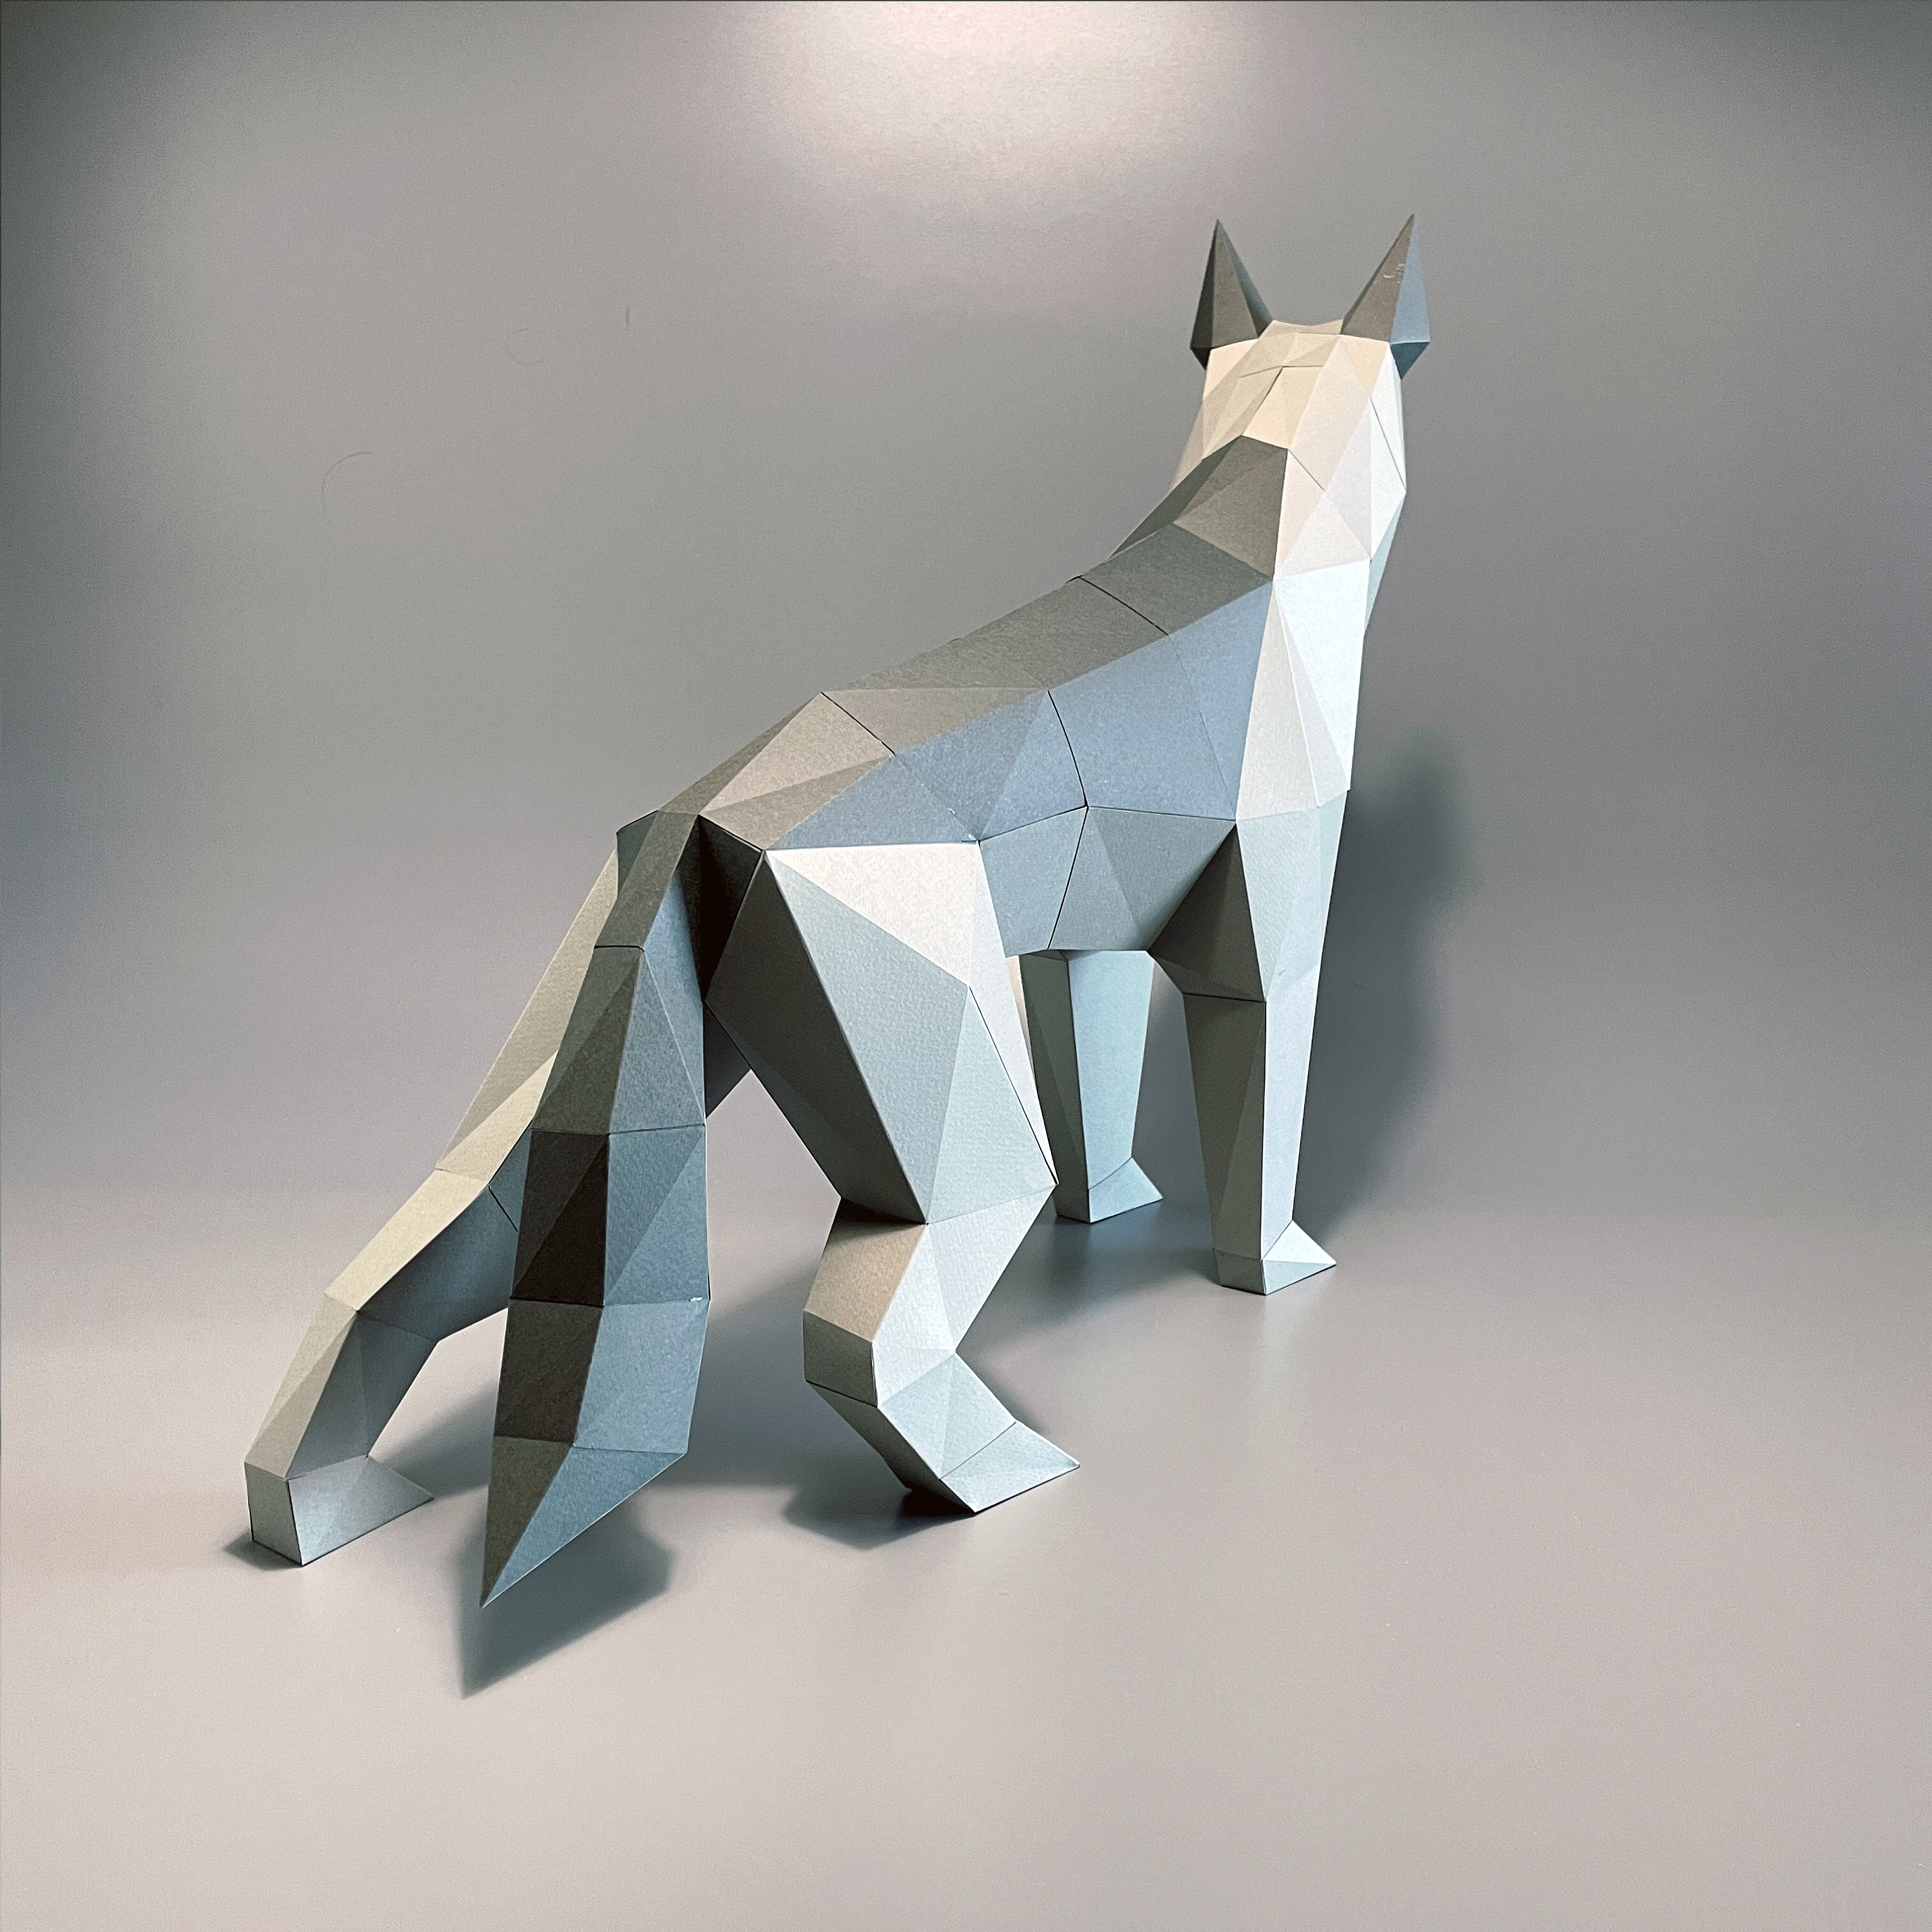 German Shepherd Dog Paper Craft3d Low Polygonal Paper | Etsy